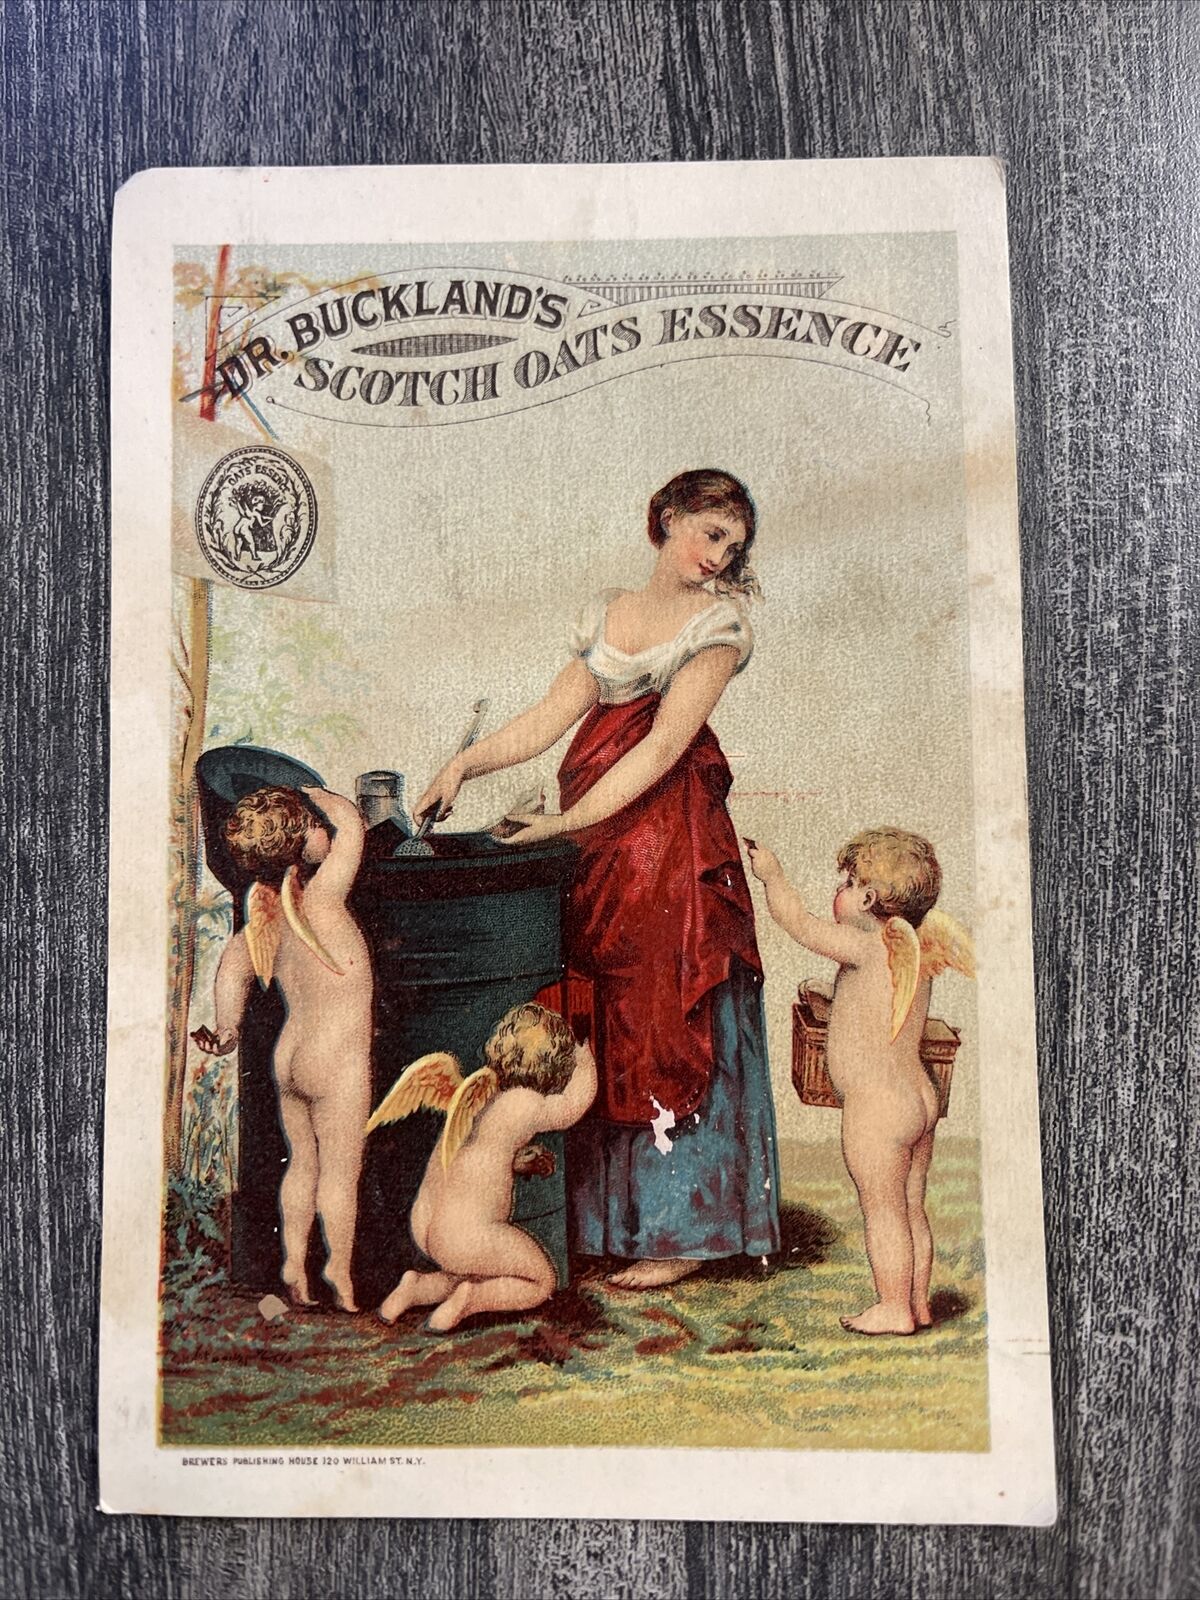 Dr. Buckland\'s Scotch Oats Essence Victorian Trade Card Winged Infants / Cherubs